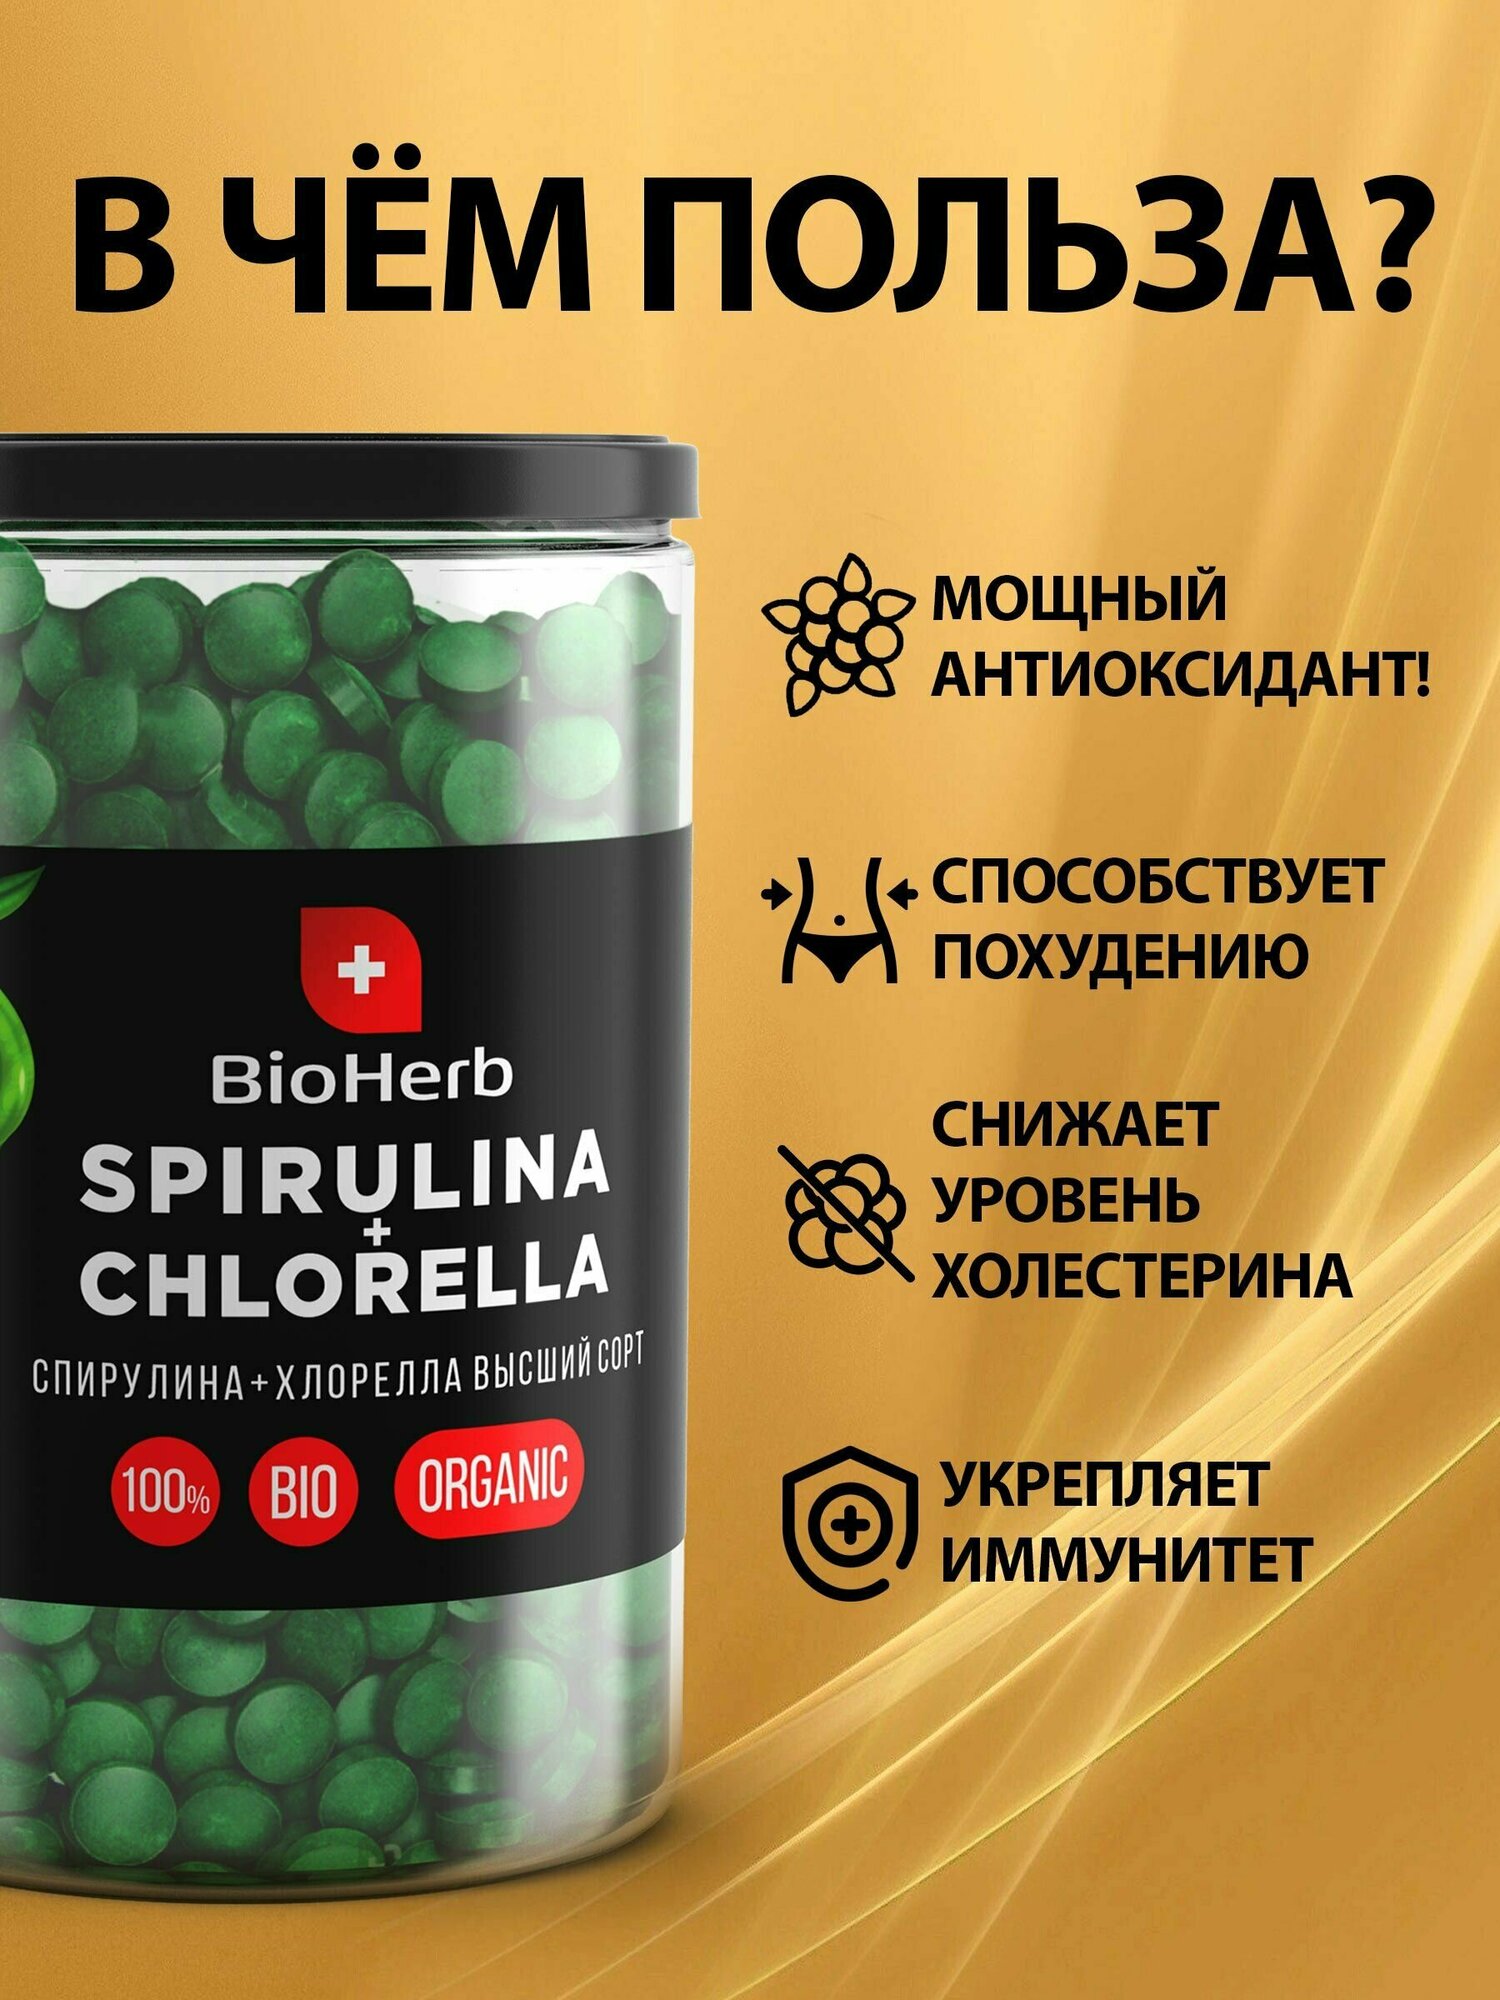 BioHerb Спирулина и хлорелла в таблетках, суперфуд, 100% натуральная, 400 г (1600 шт)